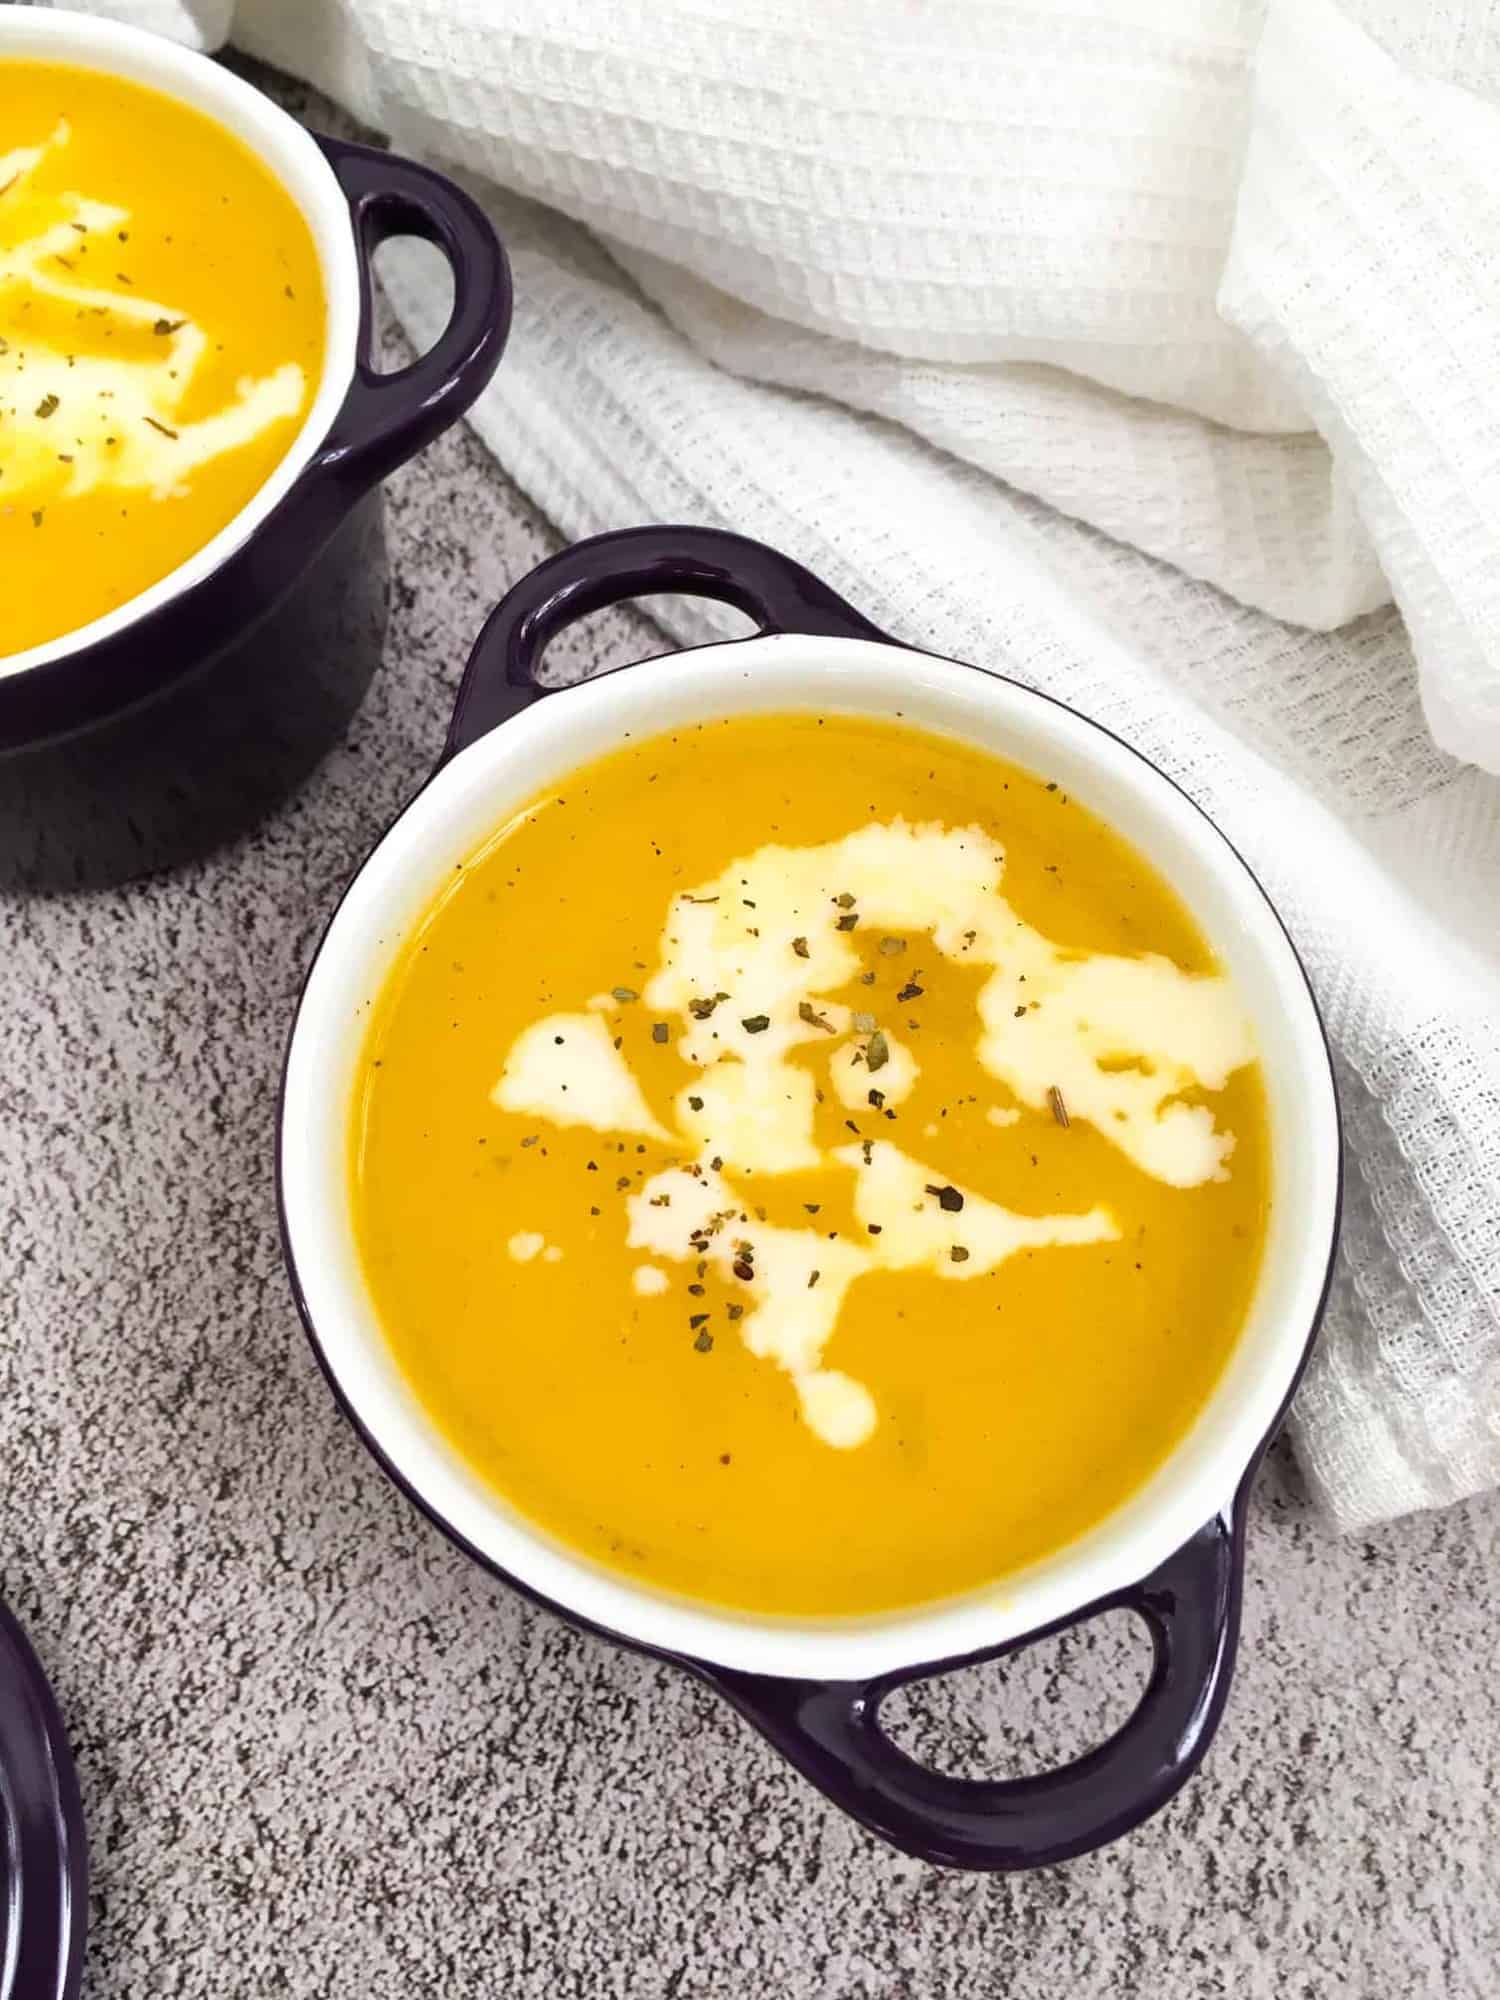 vegan butternut squash soup in bowl with cream garnish